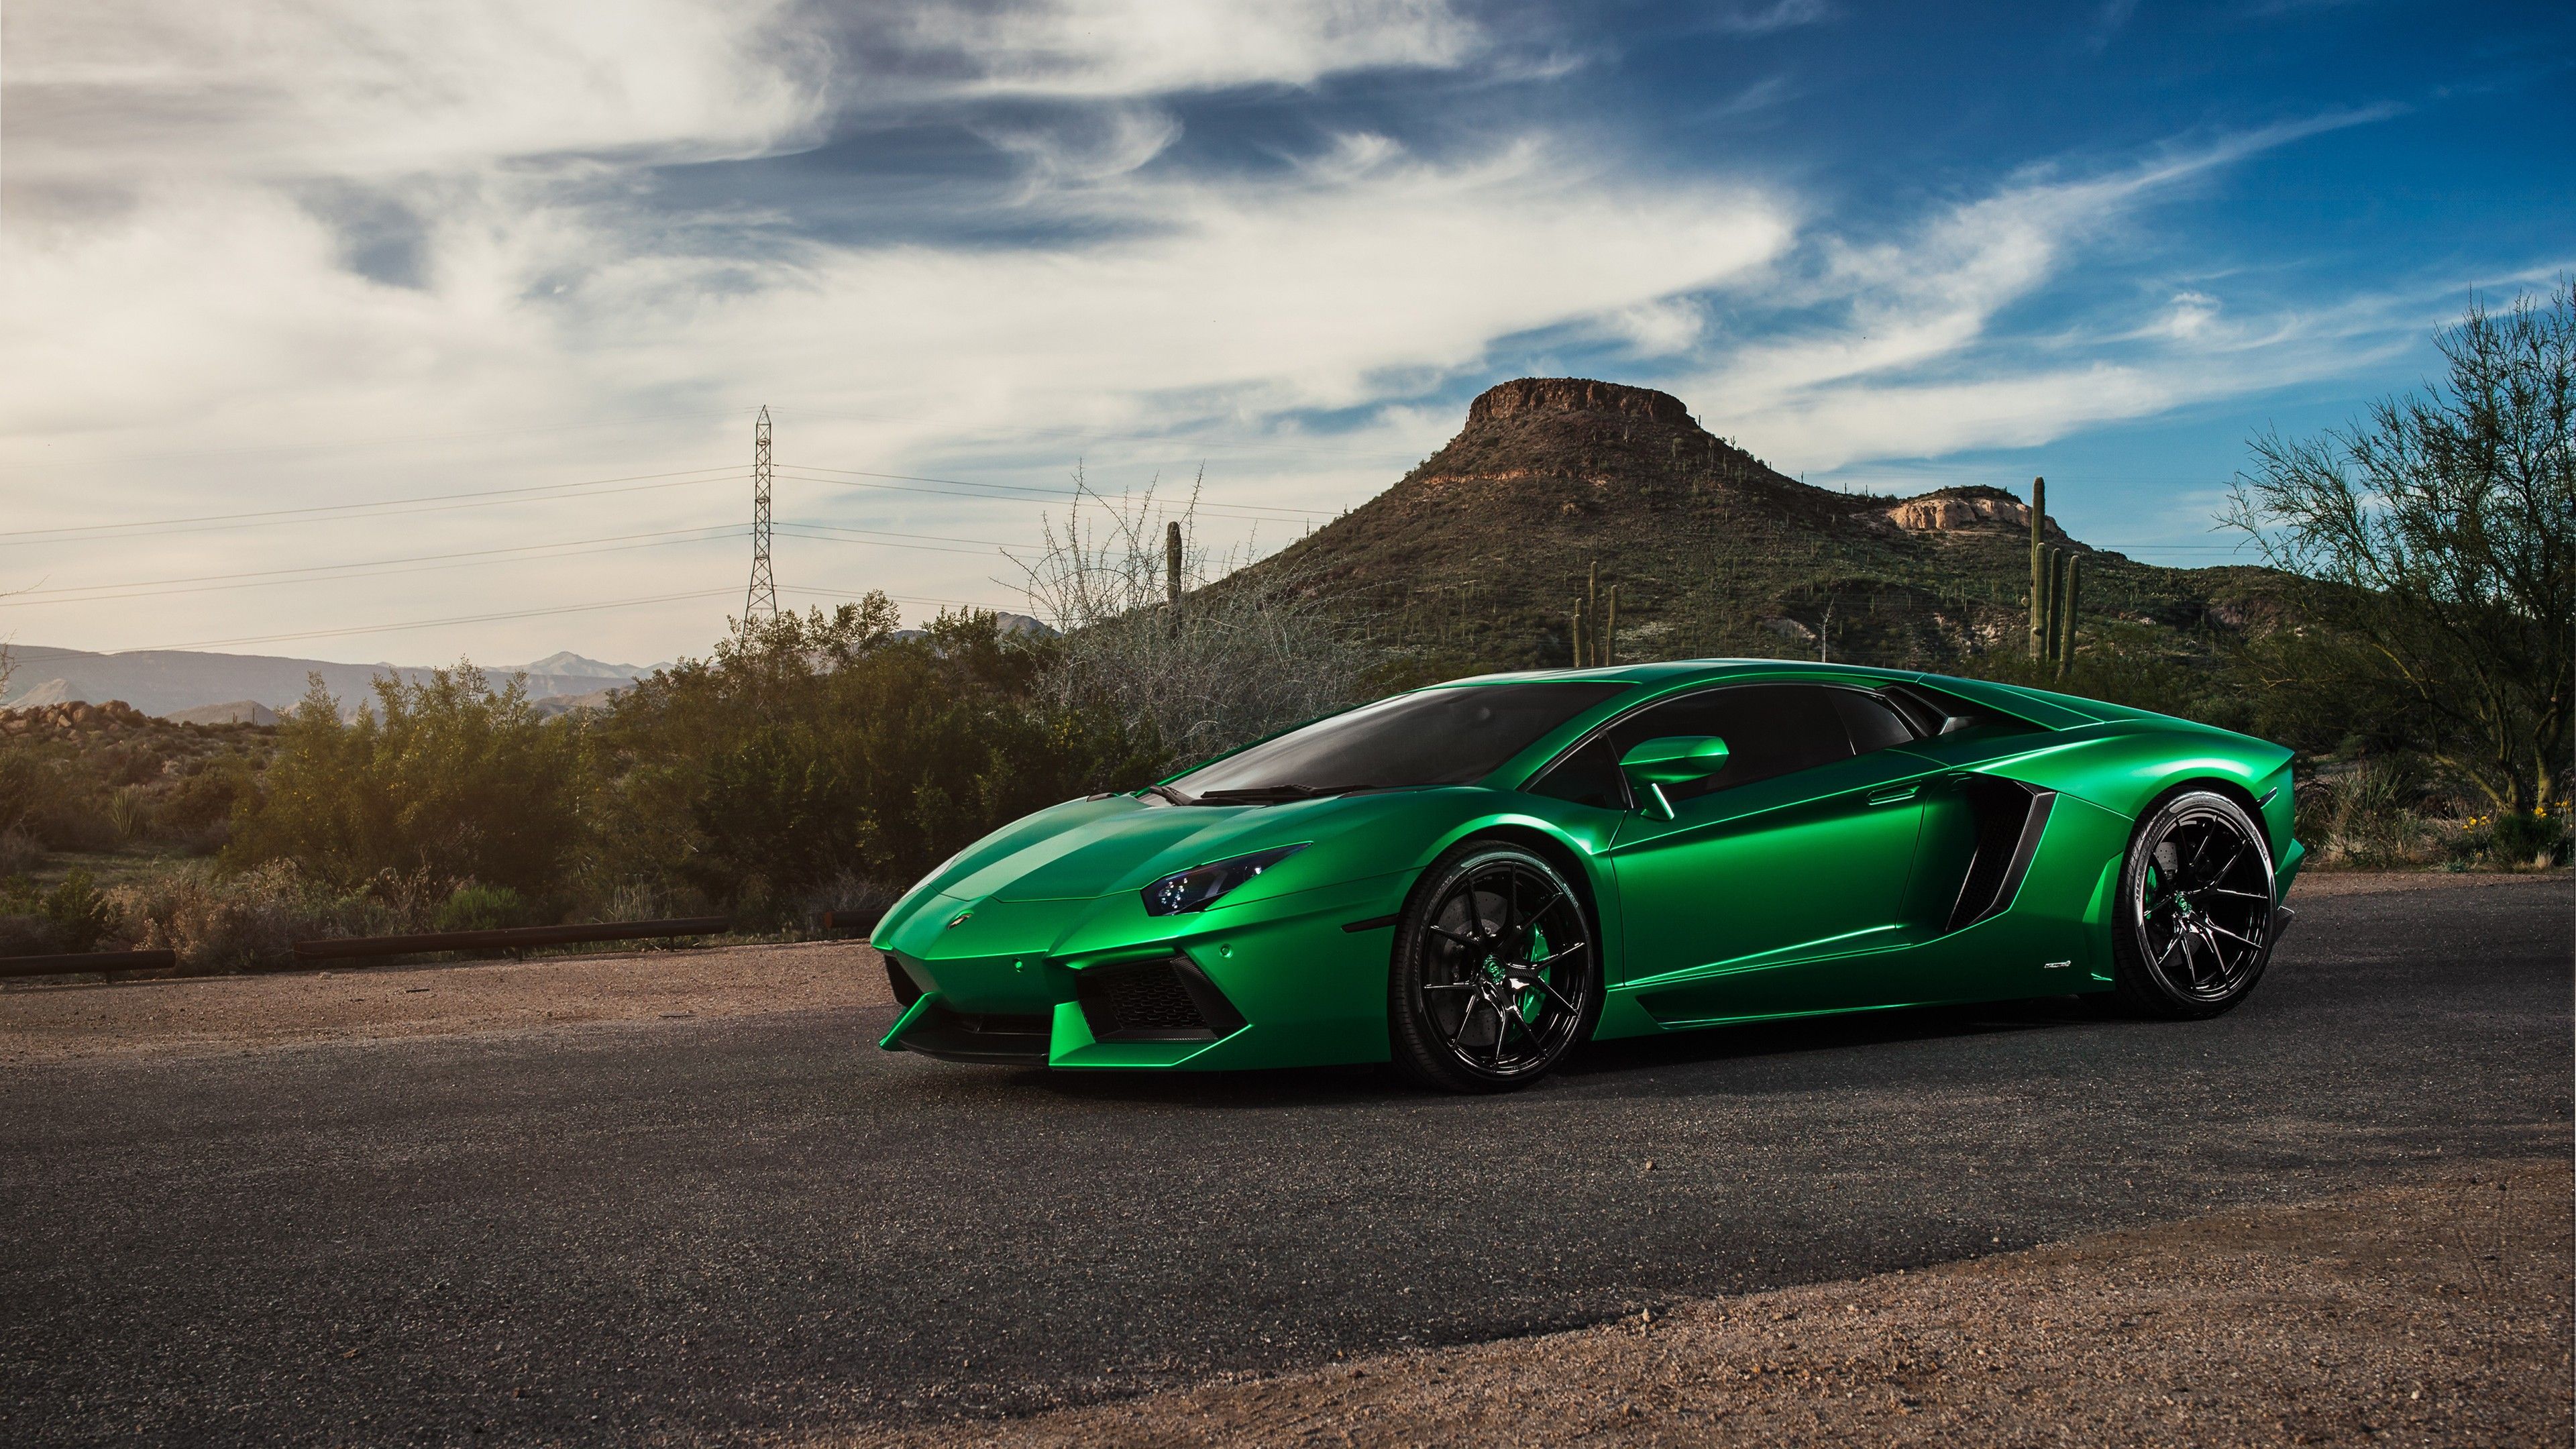 Lamborghini Aventador Green 4k, HD Cars, 4k Wallpaper, Image, Background, Photo and Picture